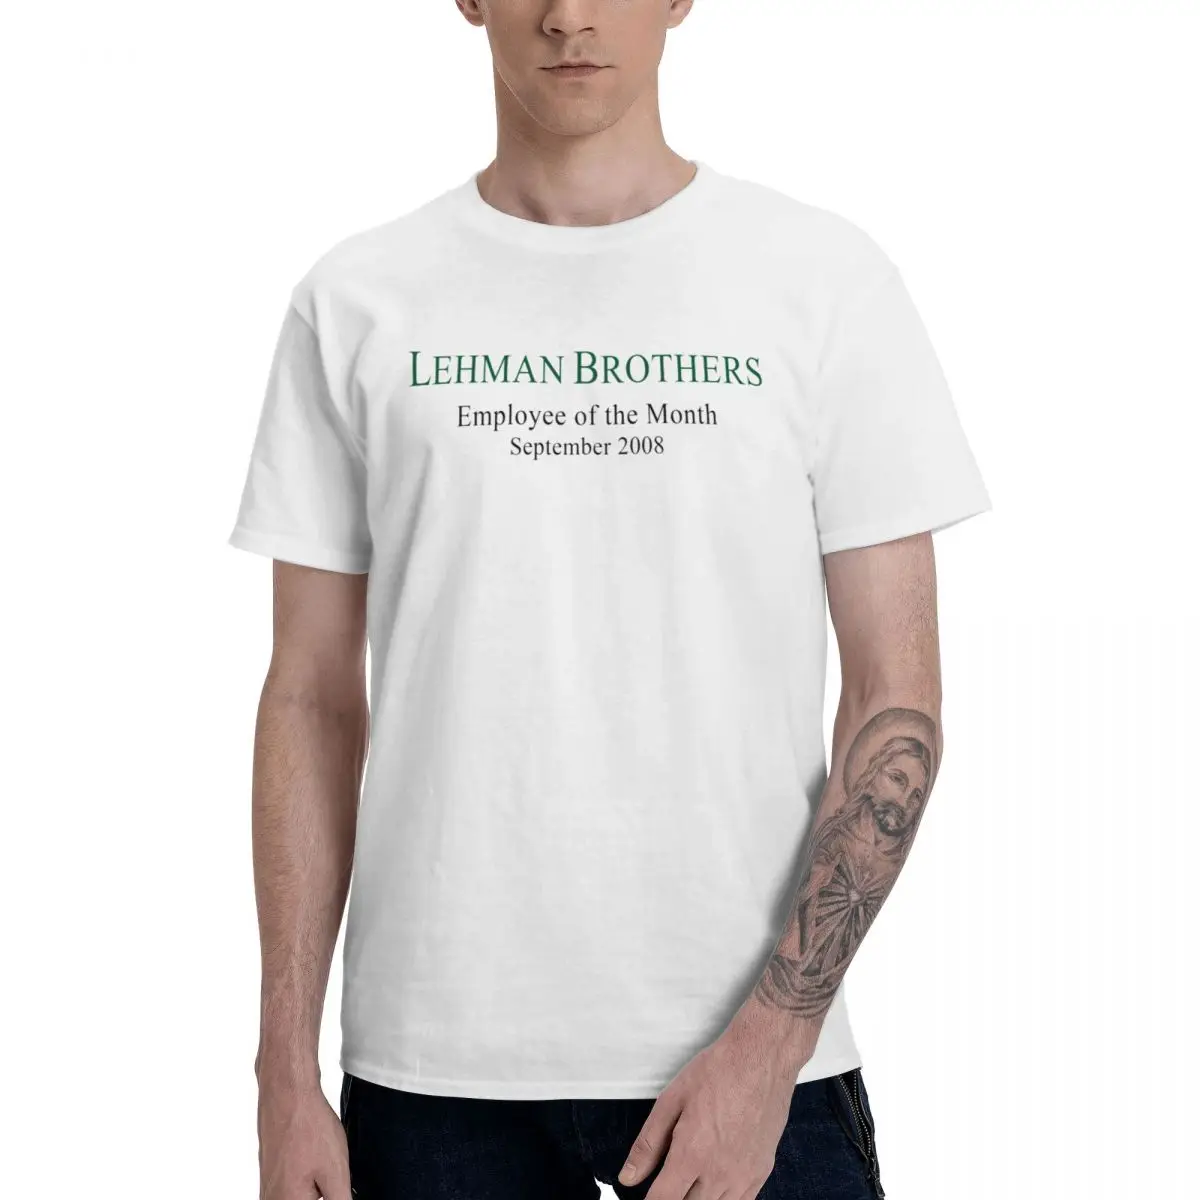 Lehman Brothers-camisetas de Humor política para hombre, camisa de cuello redondo de 100% algodón, de manga corta, de talla grande, ropa clásica, talla estadounidense